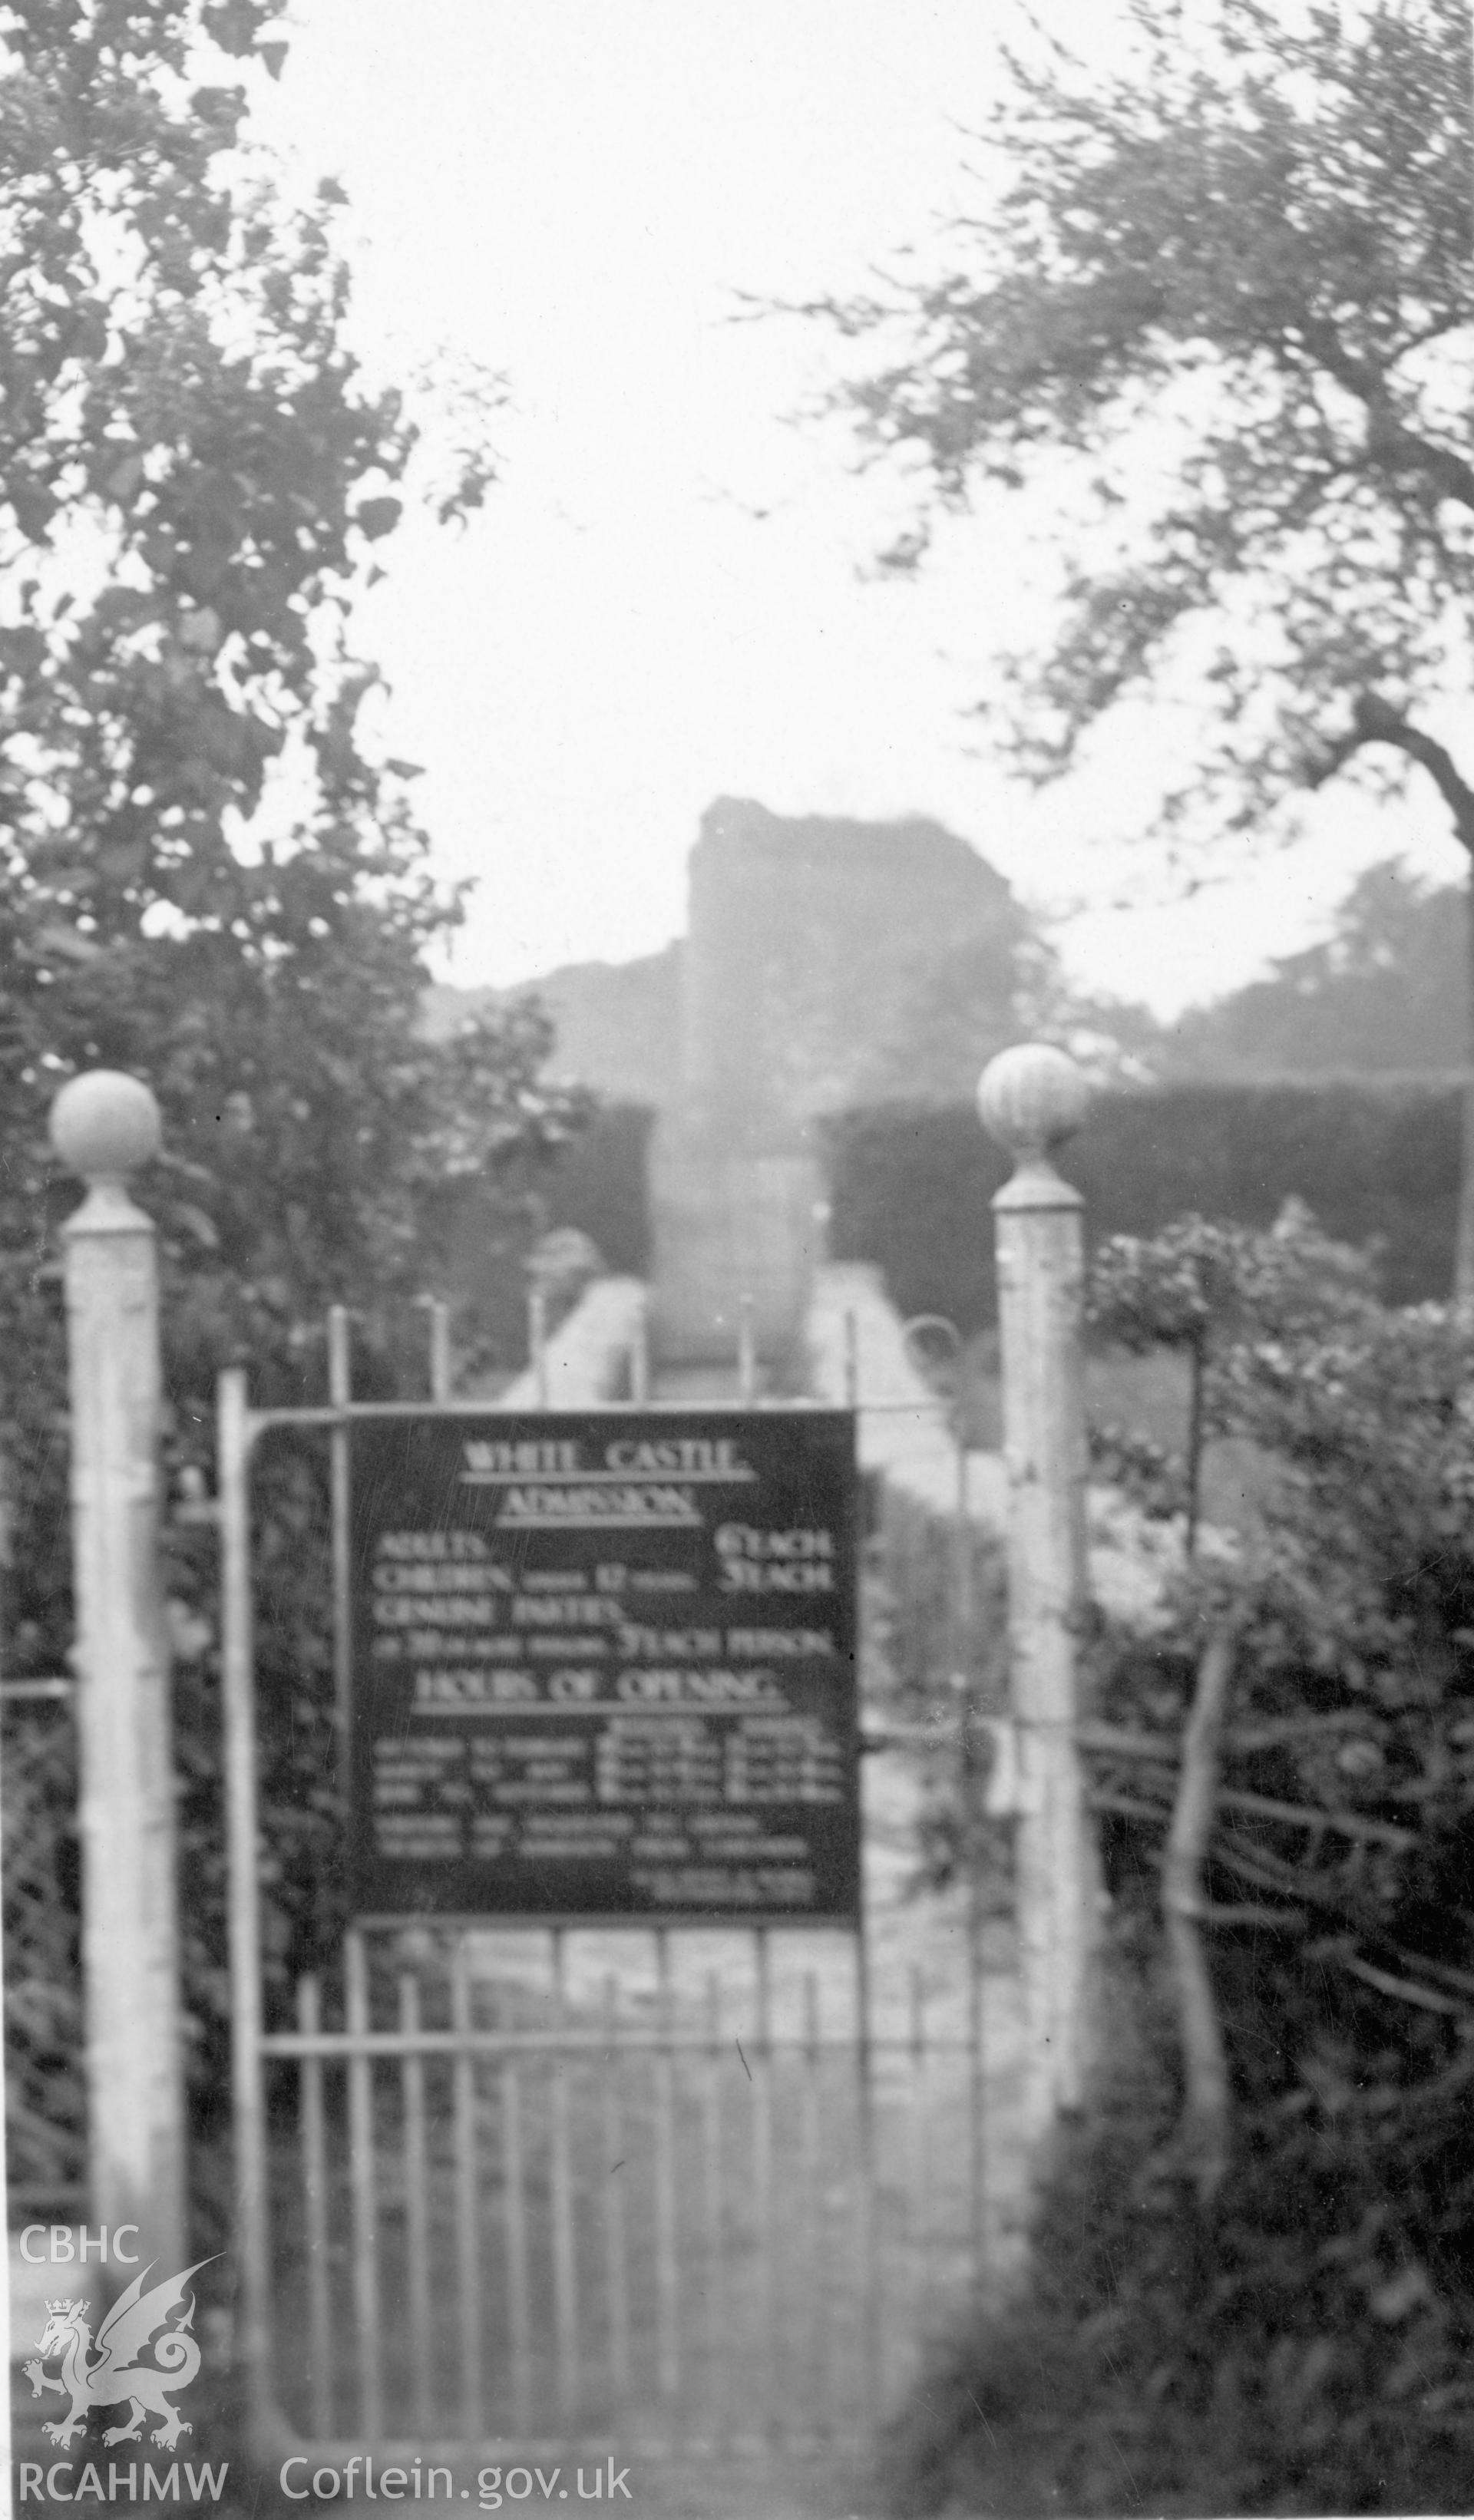 View of entrance/access point to gateway at White Castle, Llantilio.